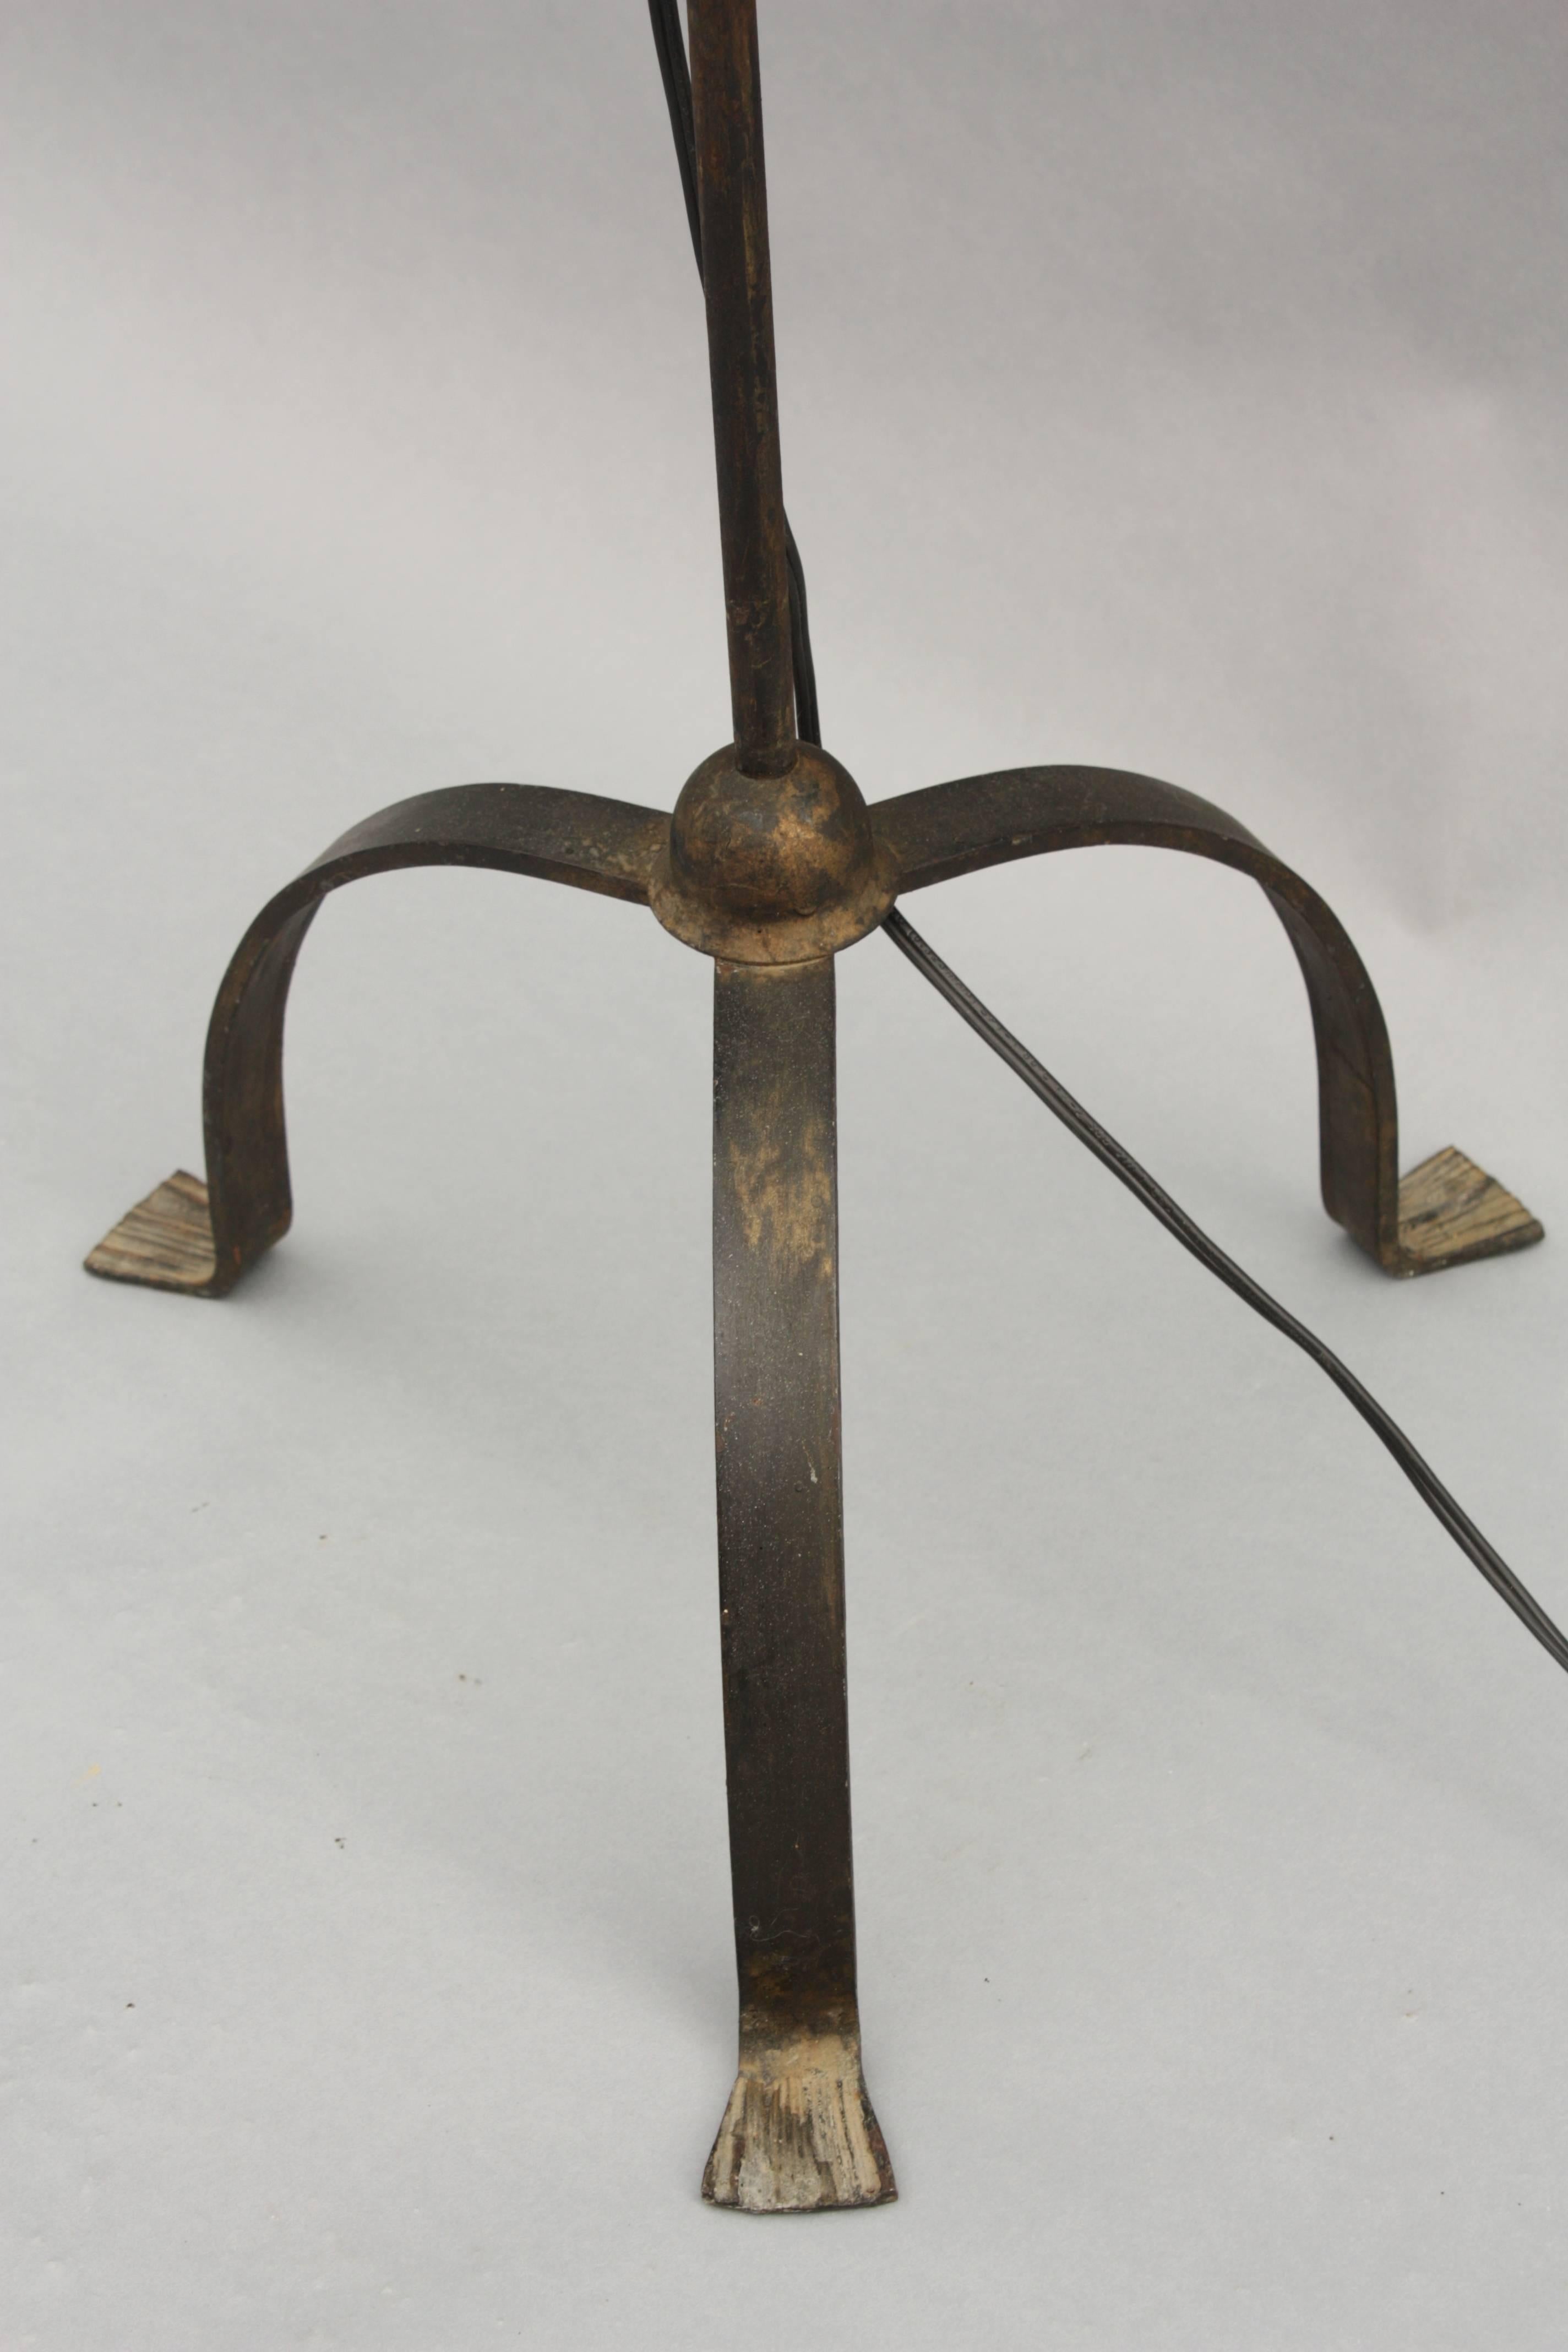 North American Antique Adjustable Bridge Lamp with Original Shade